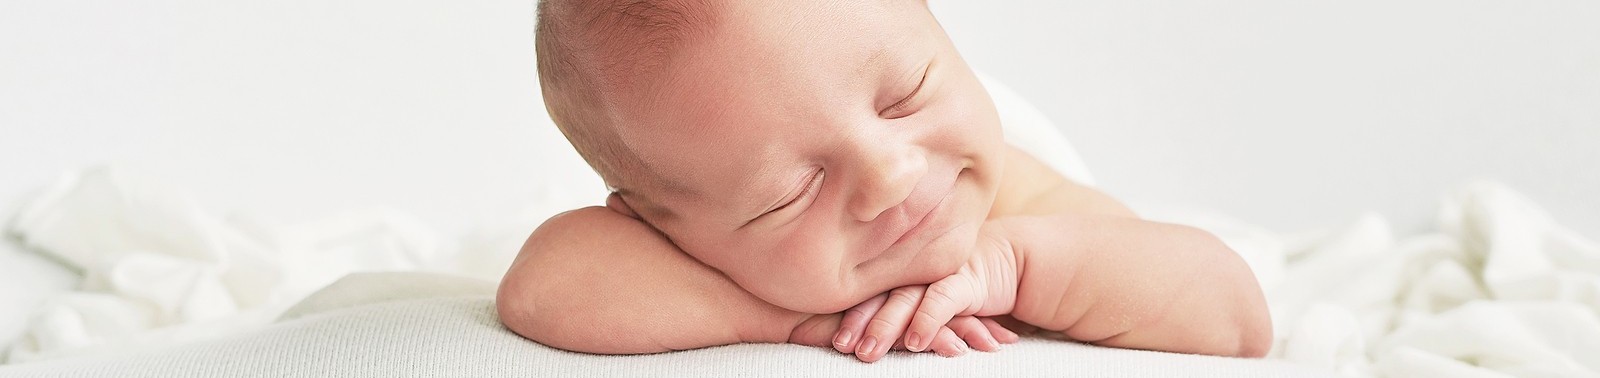 bigstock-Newborn-Baby-Boy-Sleeping-On-A-320995450.jpg